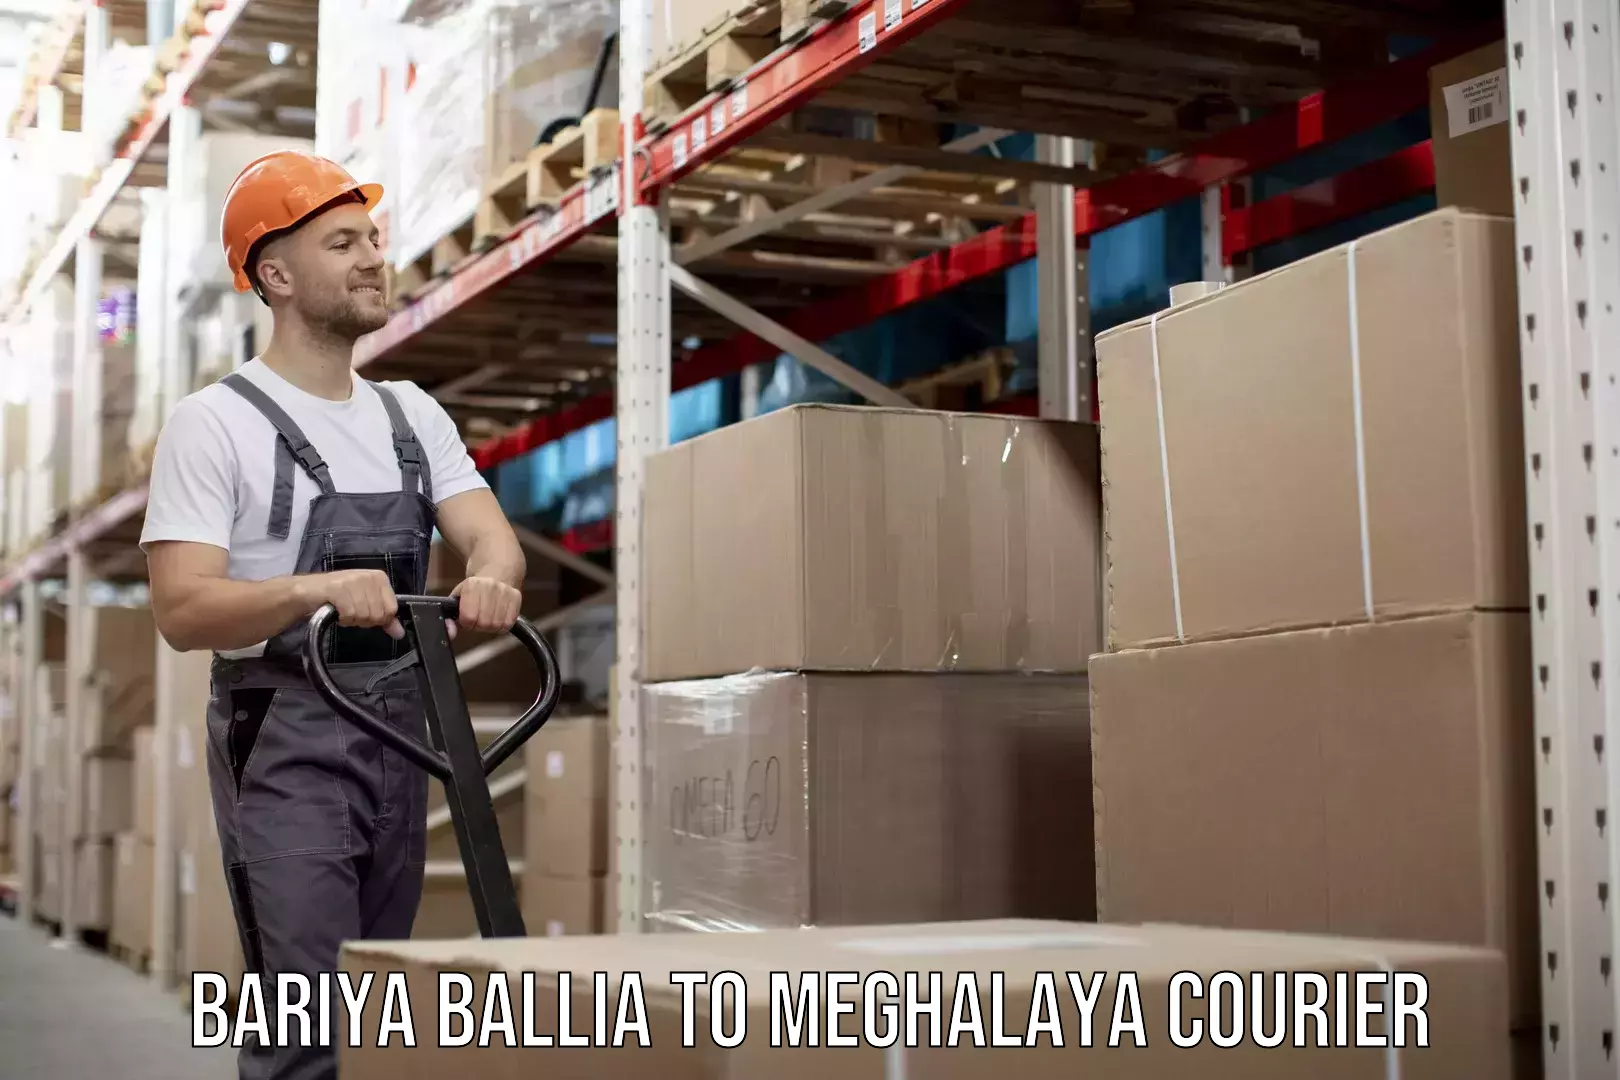 Express mail service Bariya Ballia to Meghalaya